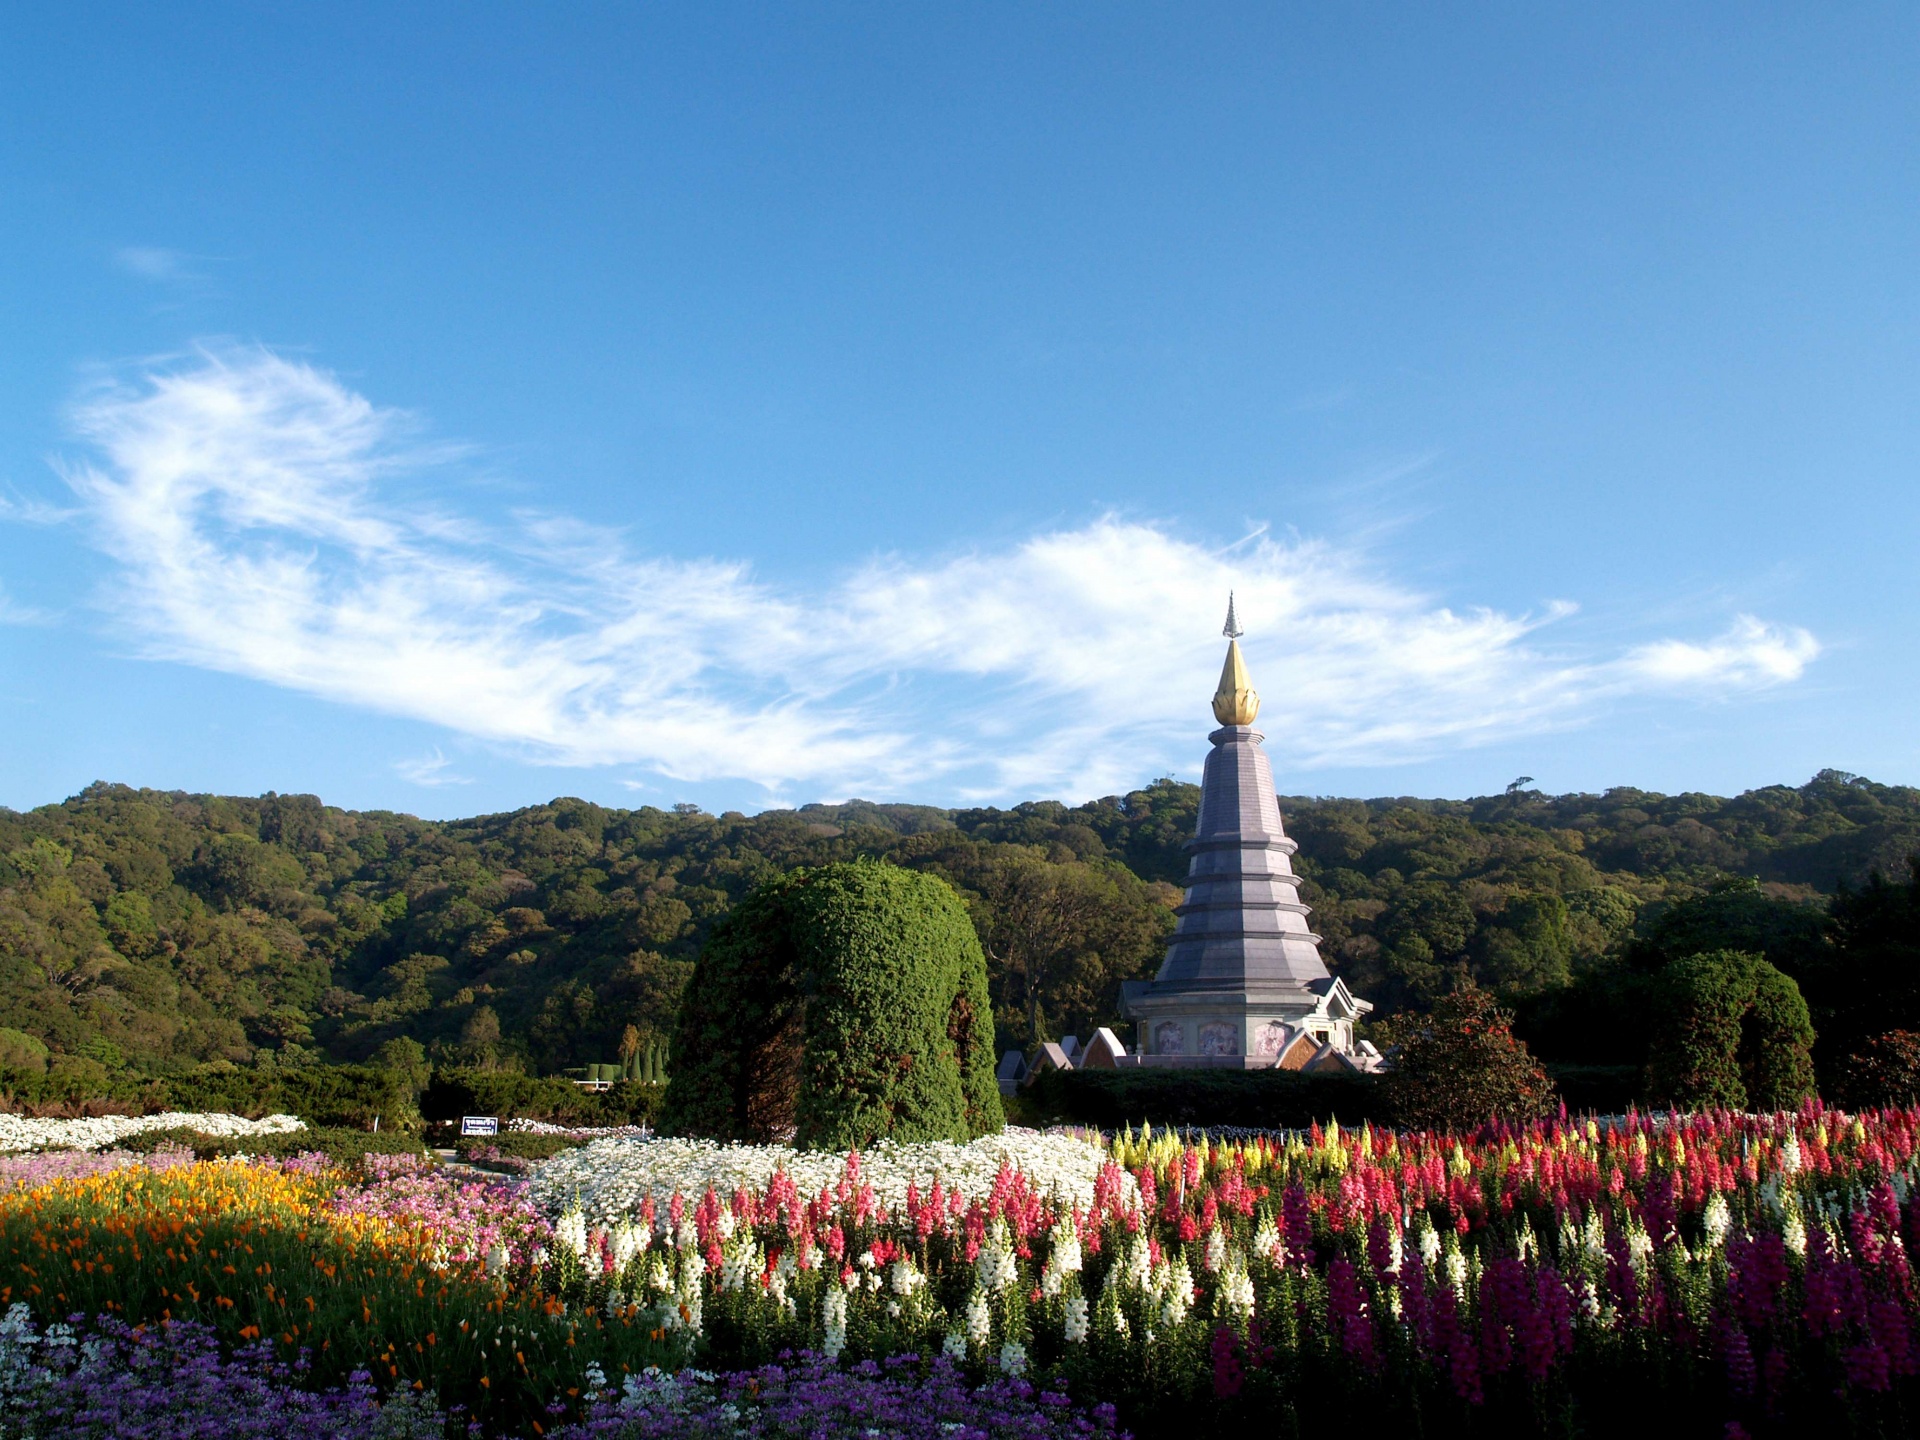 two-pagodas-doi-inthanon-chiang-mai--1592375536eAR.jpg